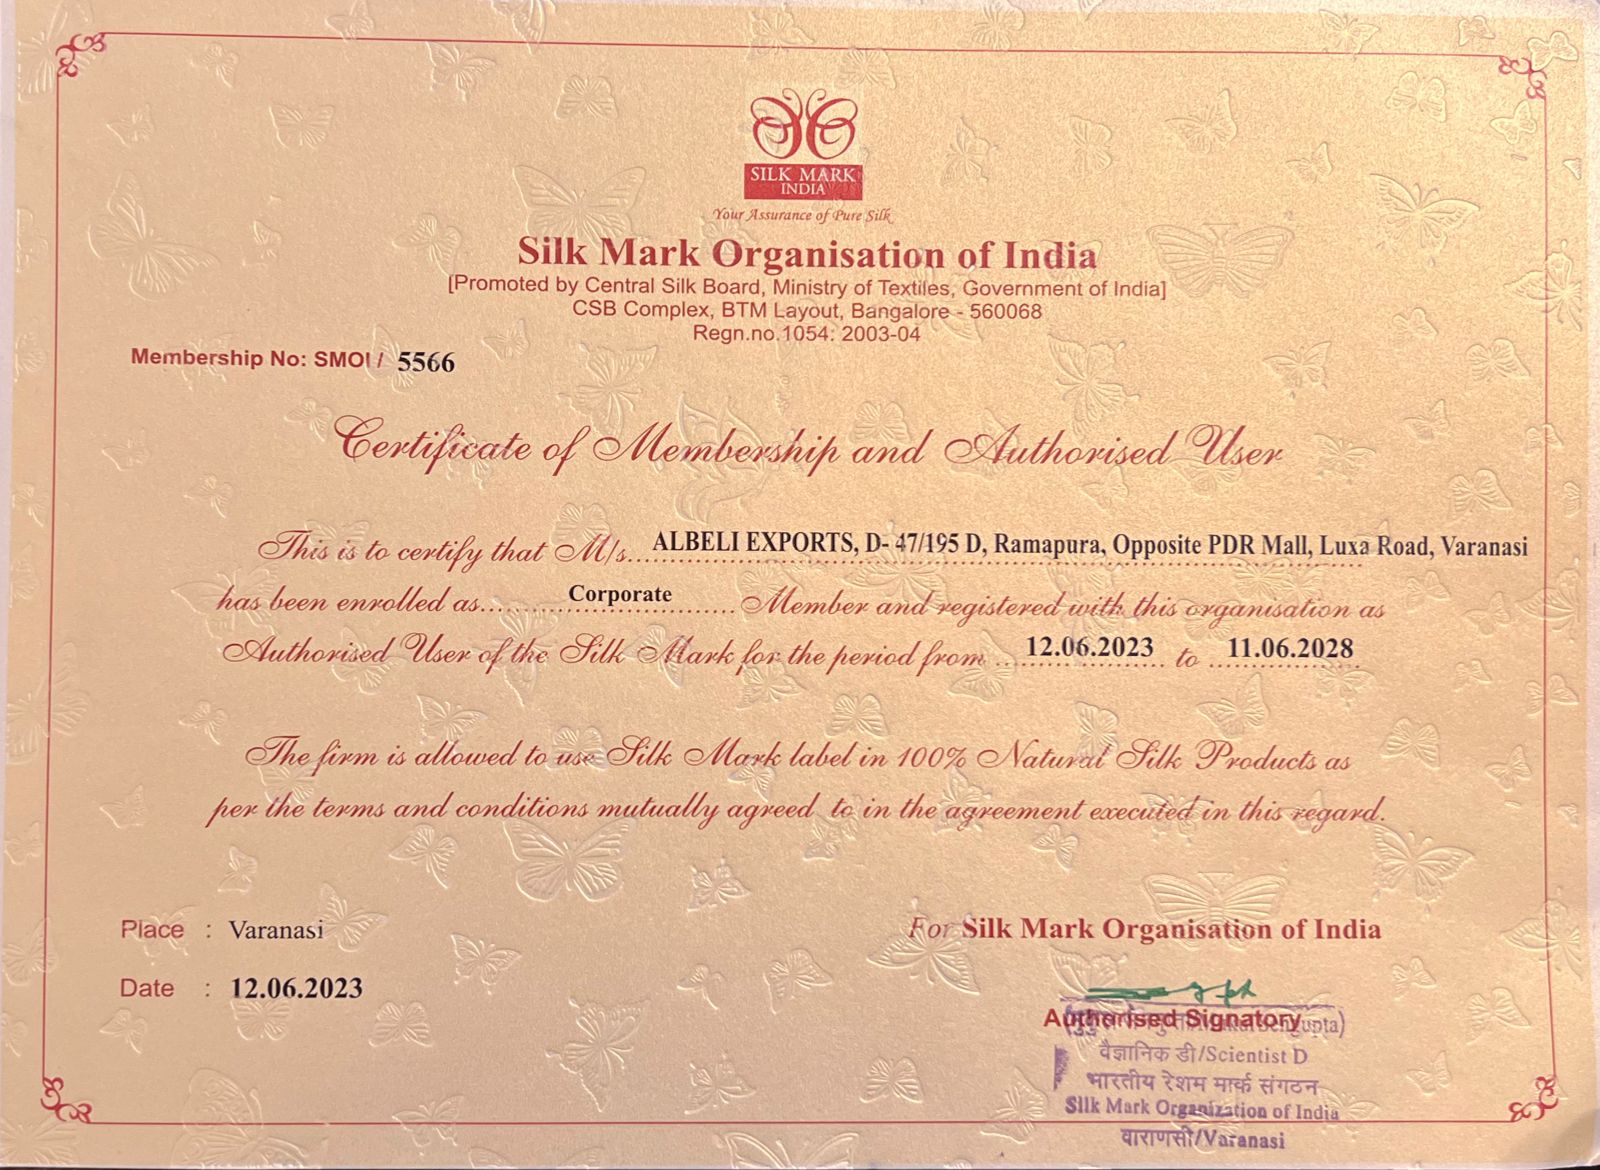 Silk mark organization of India certificate